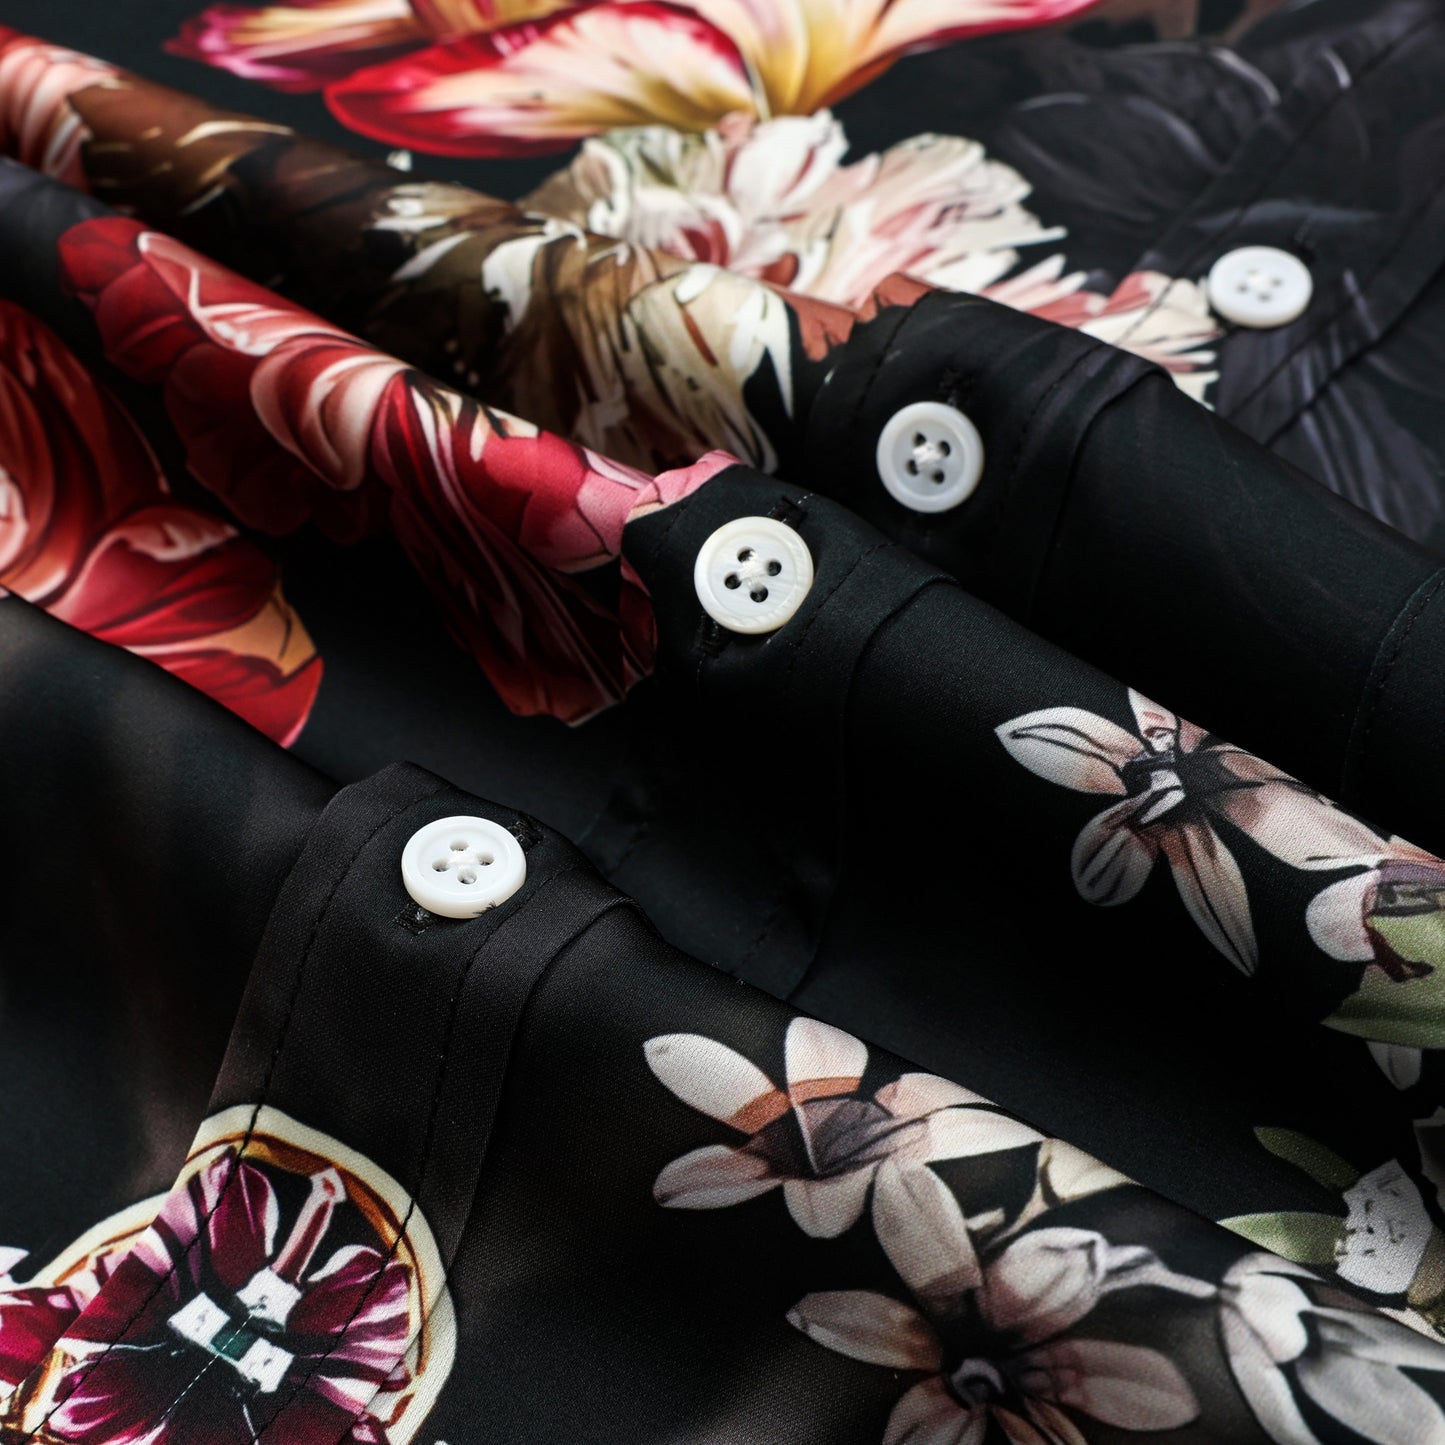 Leopard Printed Floral Silk Fiber Short Sleeve Casual Shirt